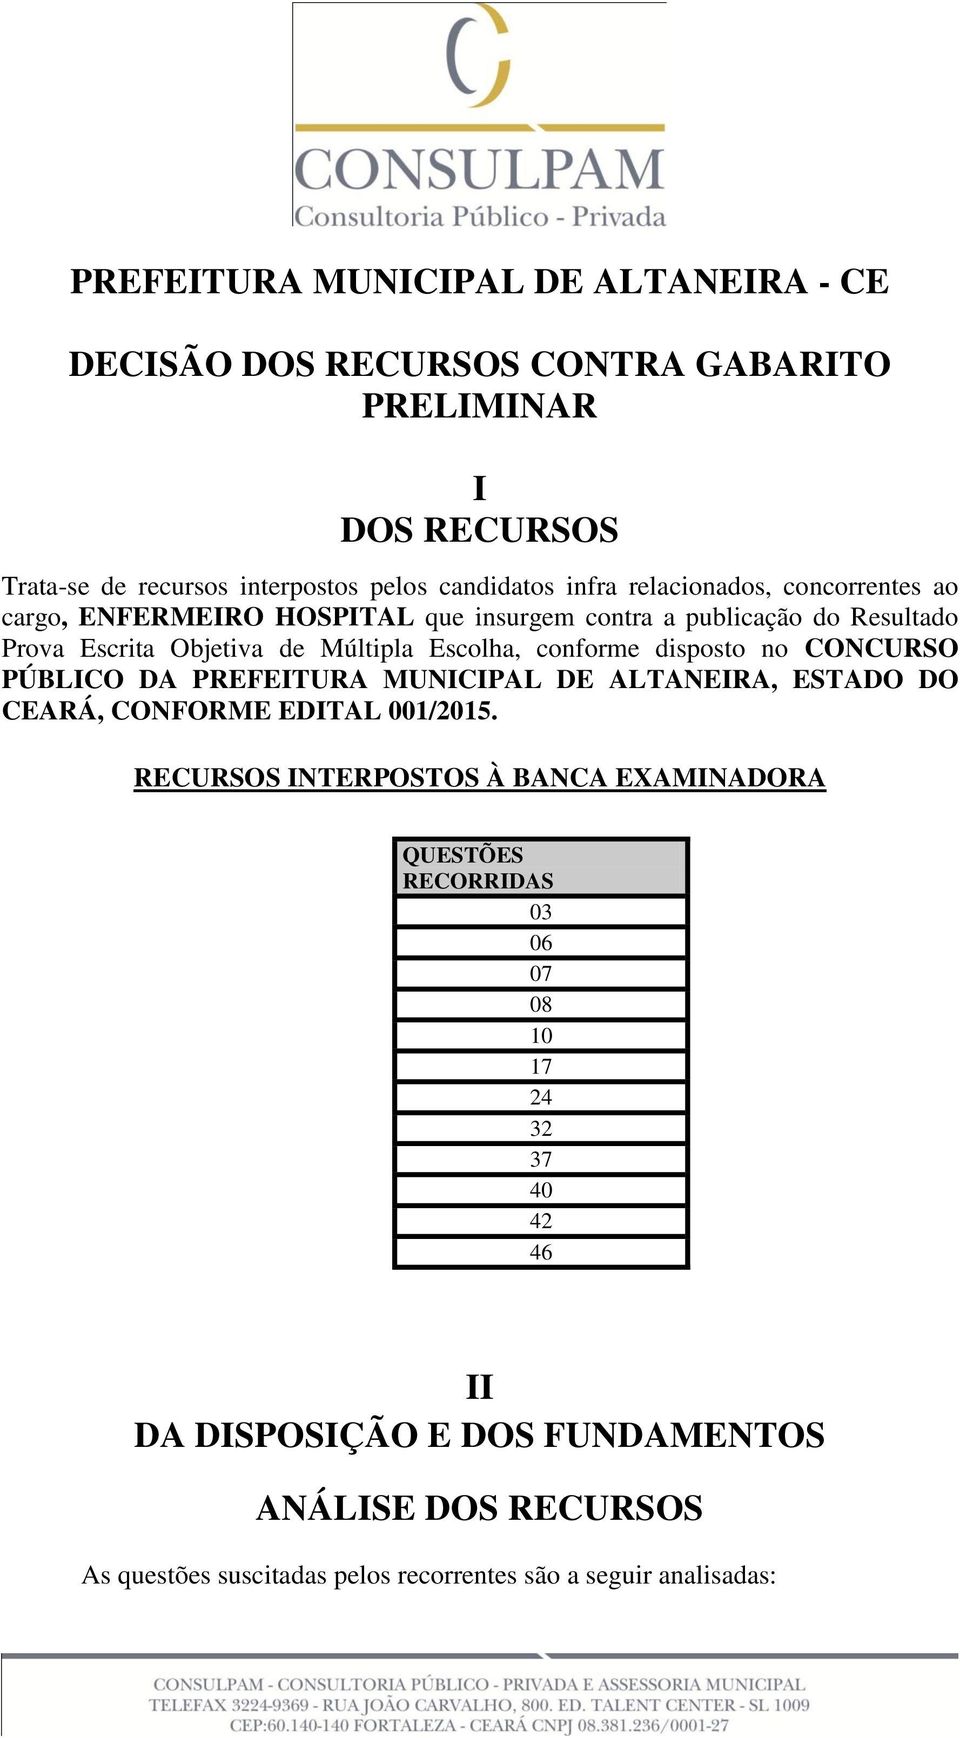 disposto no CONCURSO PÚBLICO DA PREFEITURA MUNICIPAL DE ALTANEIRA, ESTADO DO CEARÁ, CONFORME EDITAL 001/2015.